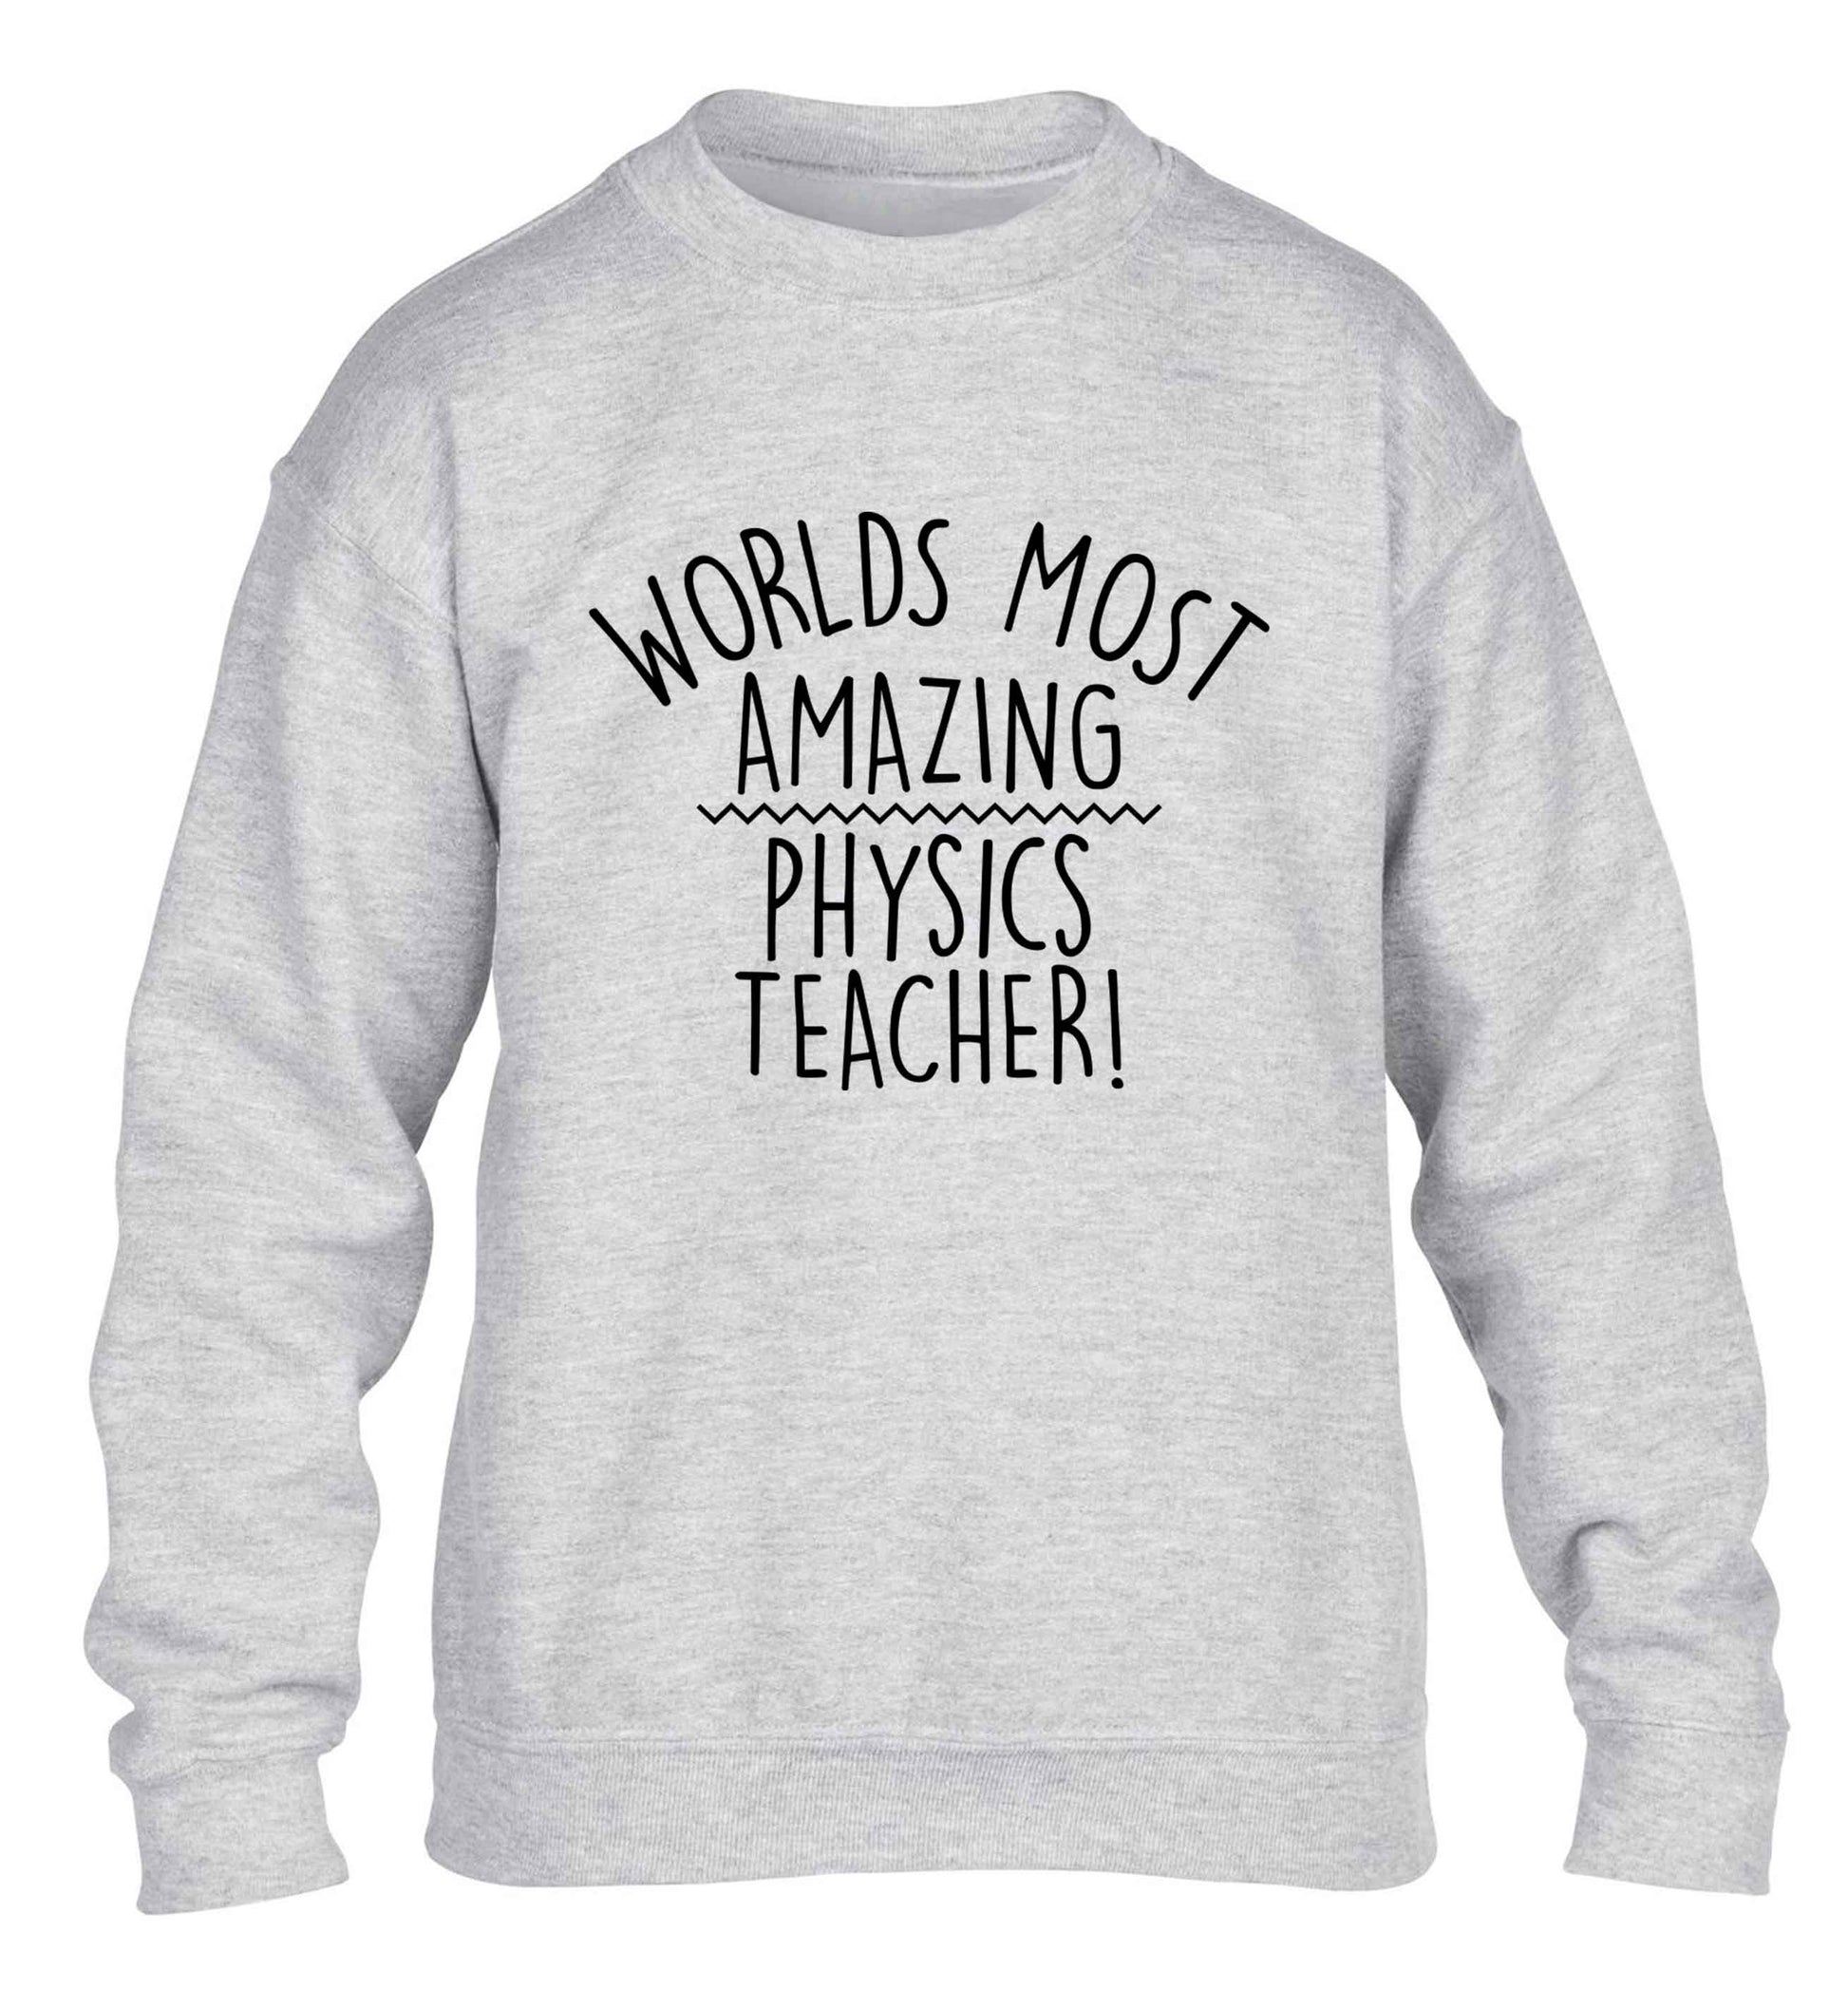 Worlds most amazing physics teacher children's grey sweater 12-13 Years